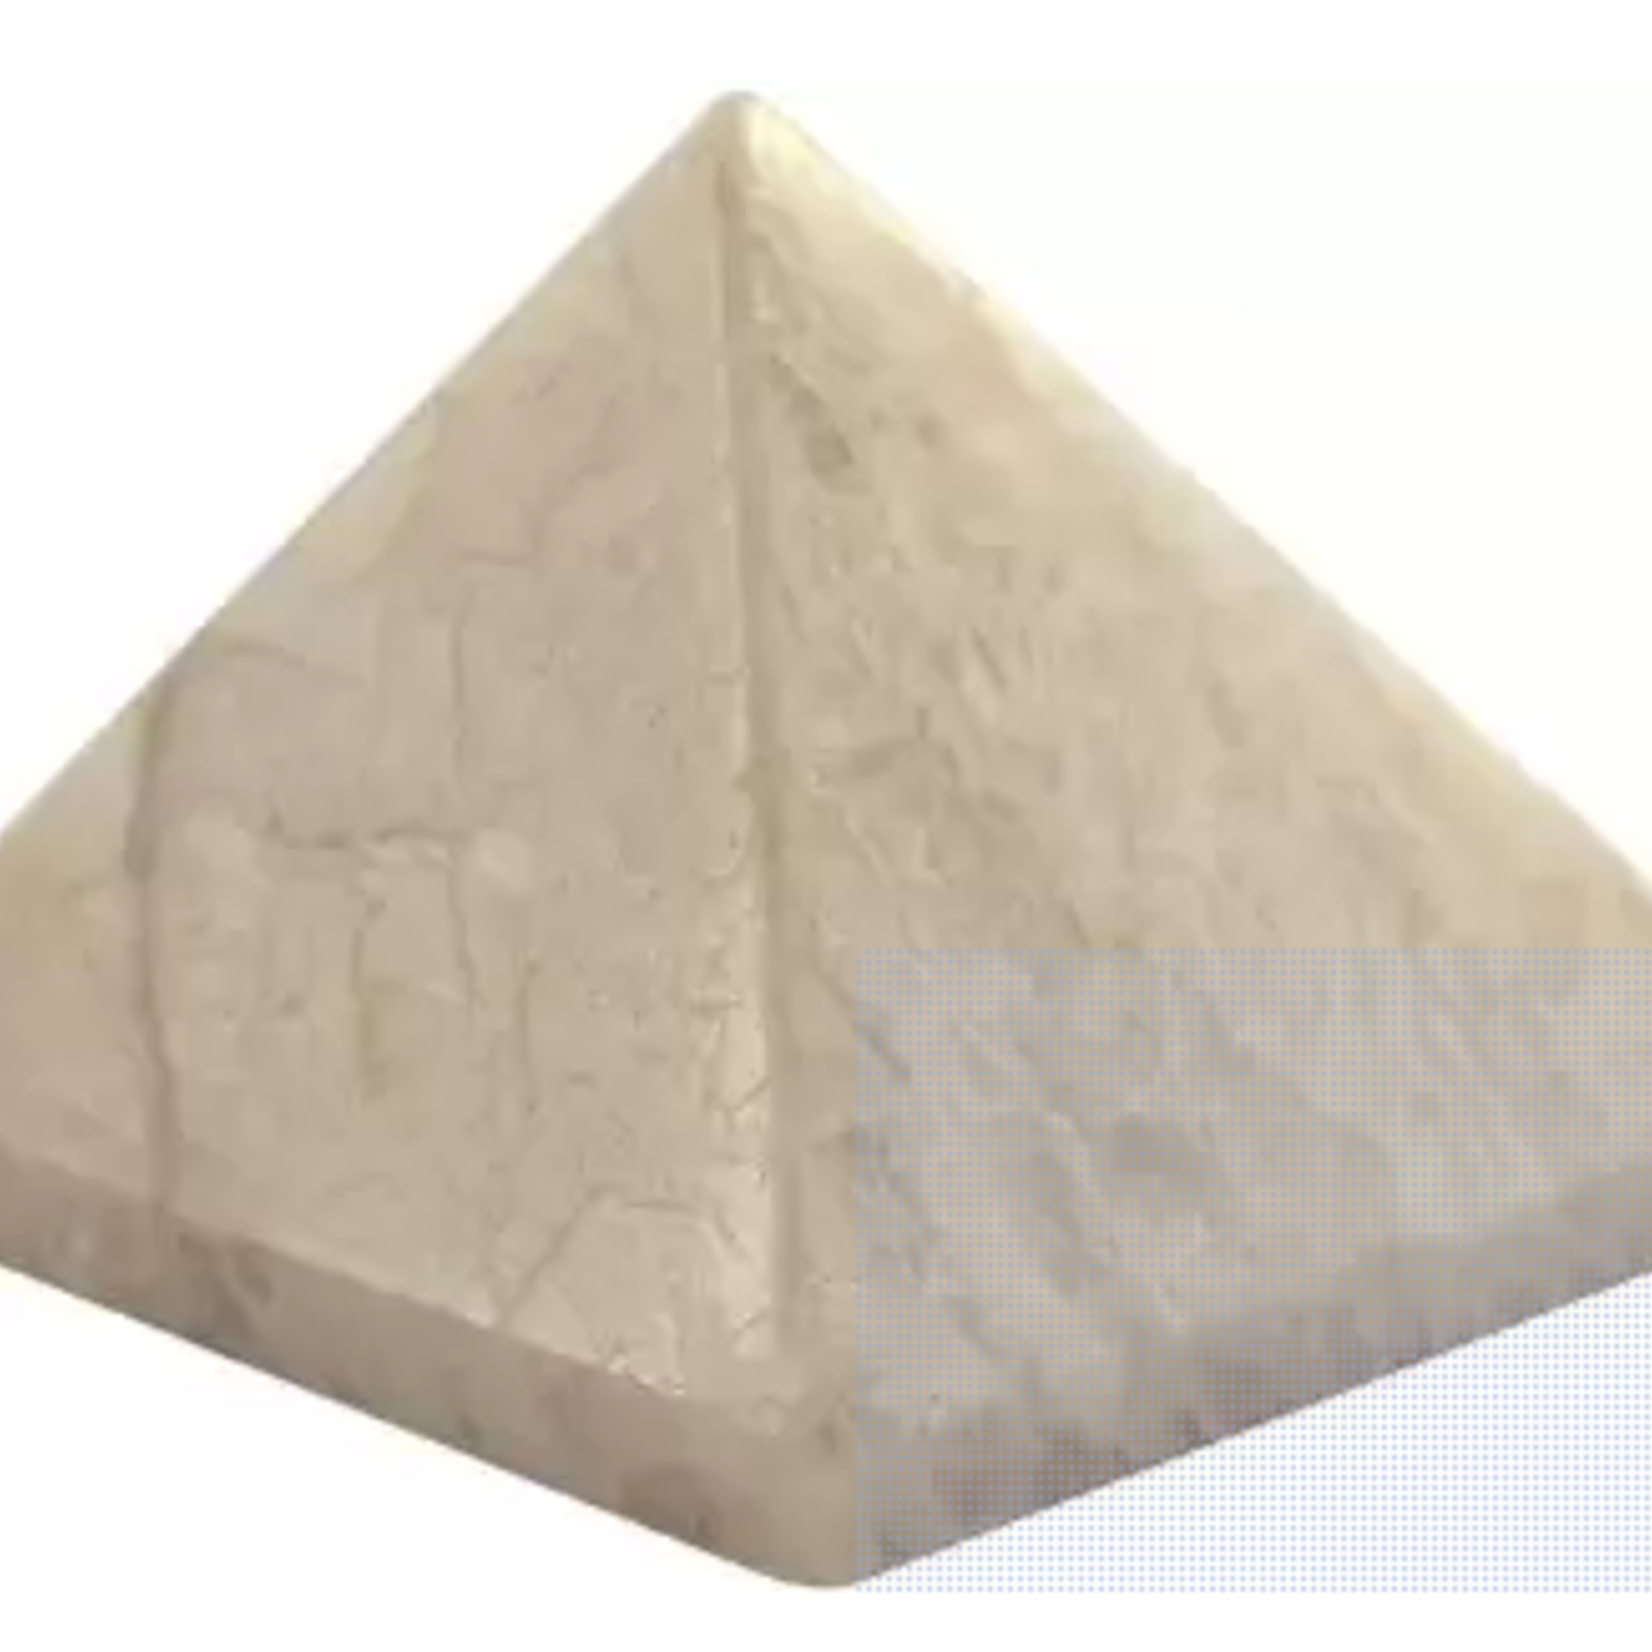 Moonstone Pyramid 25 - 30 mm